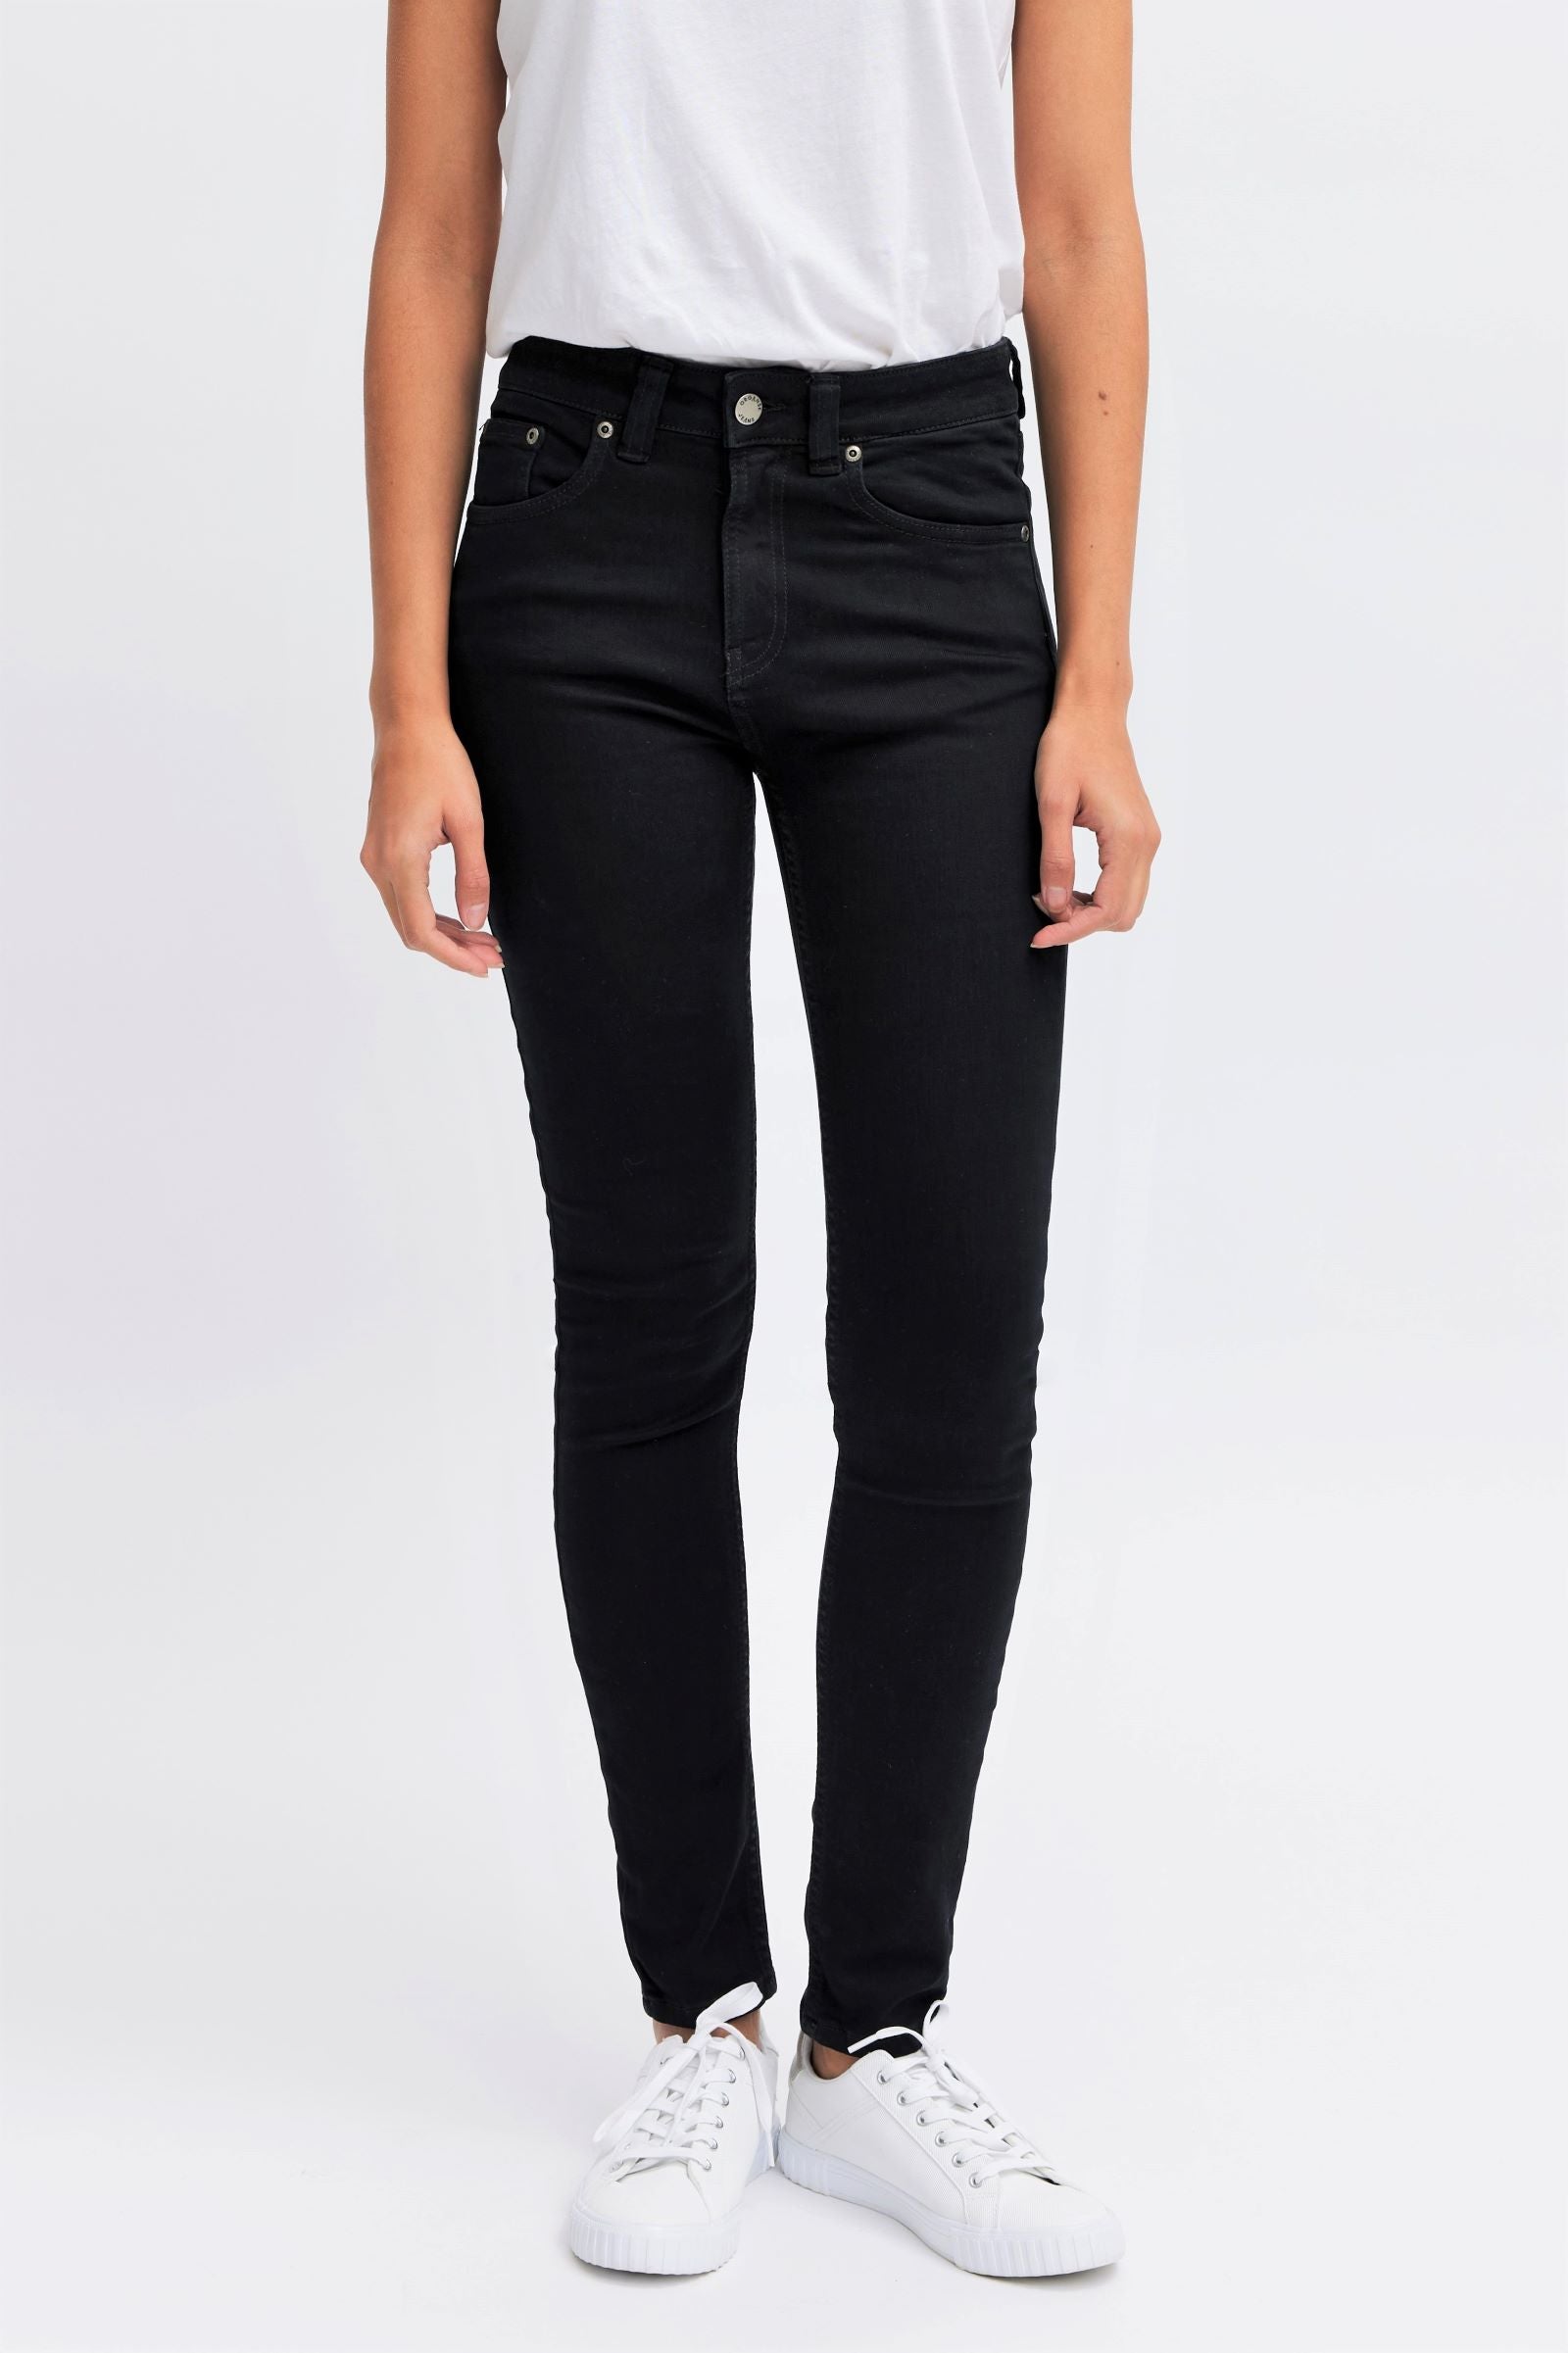 Organic black skinny jeans - Women's eco-friendly pants